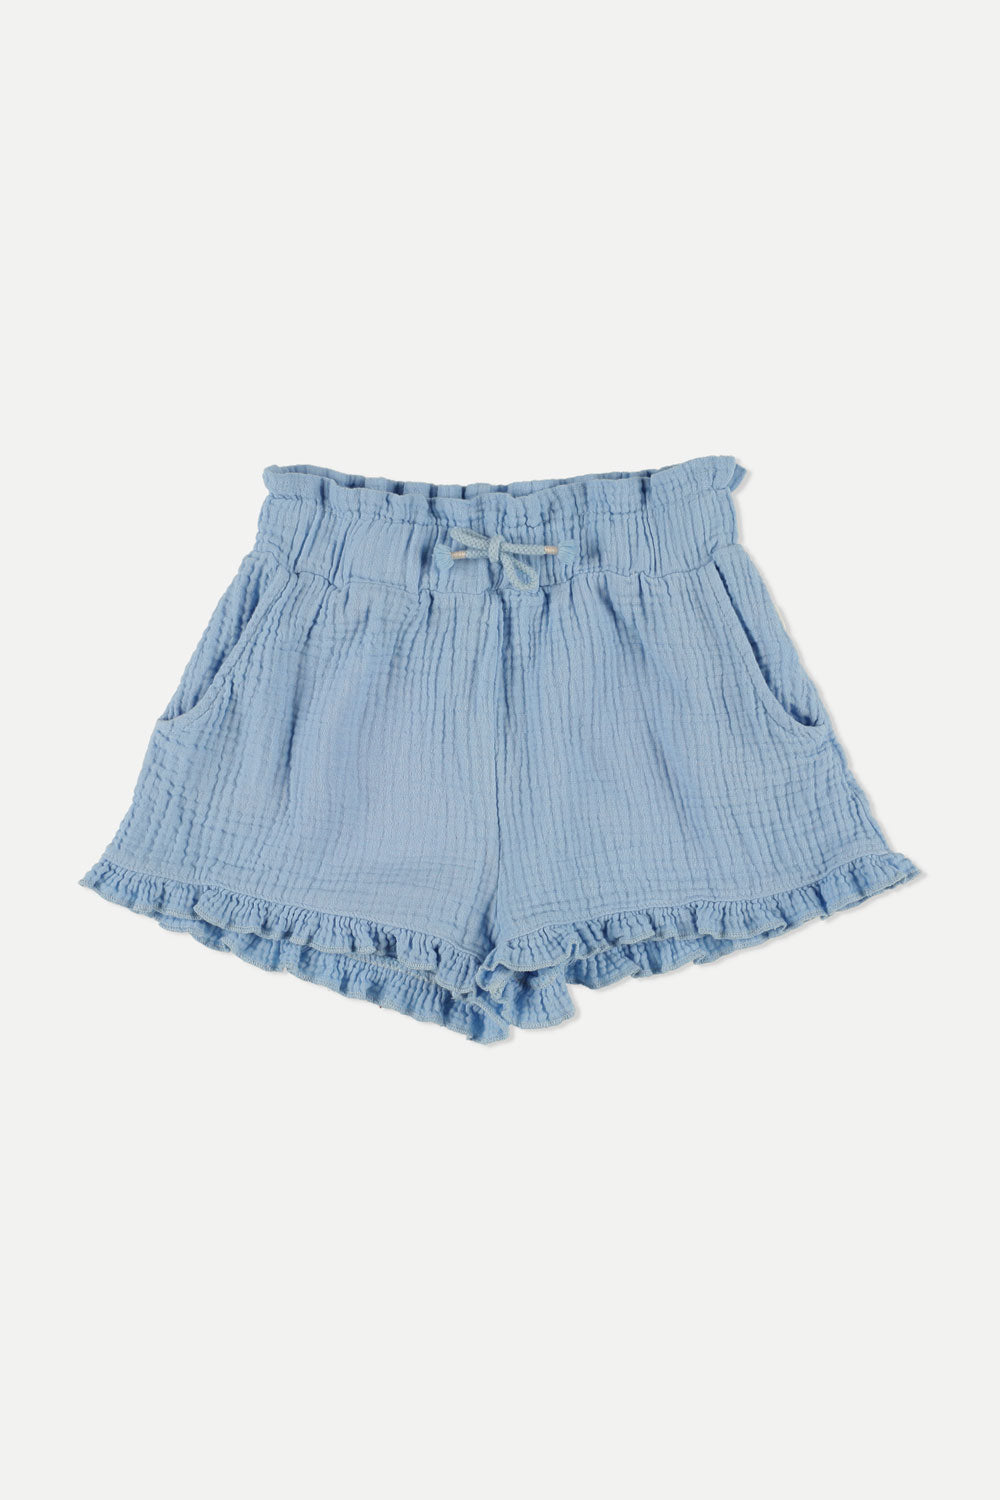 Shorts Girl Fiona Blue - ملابس